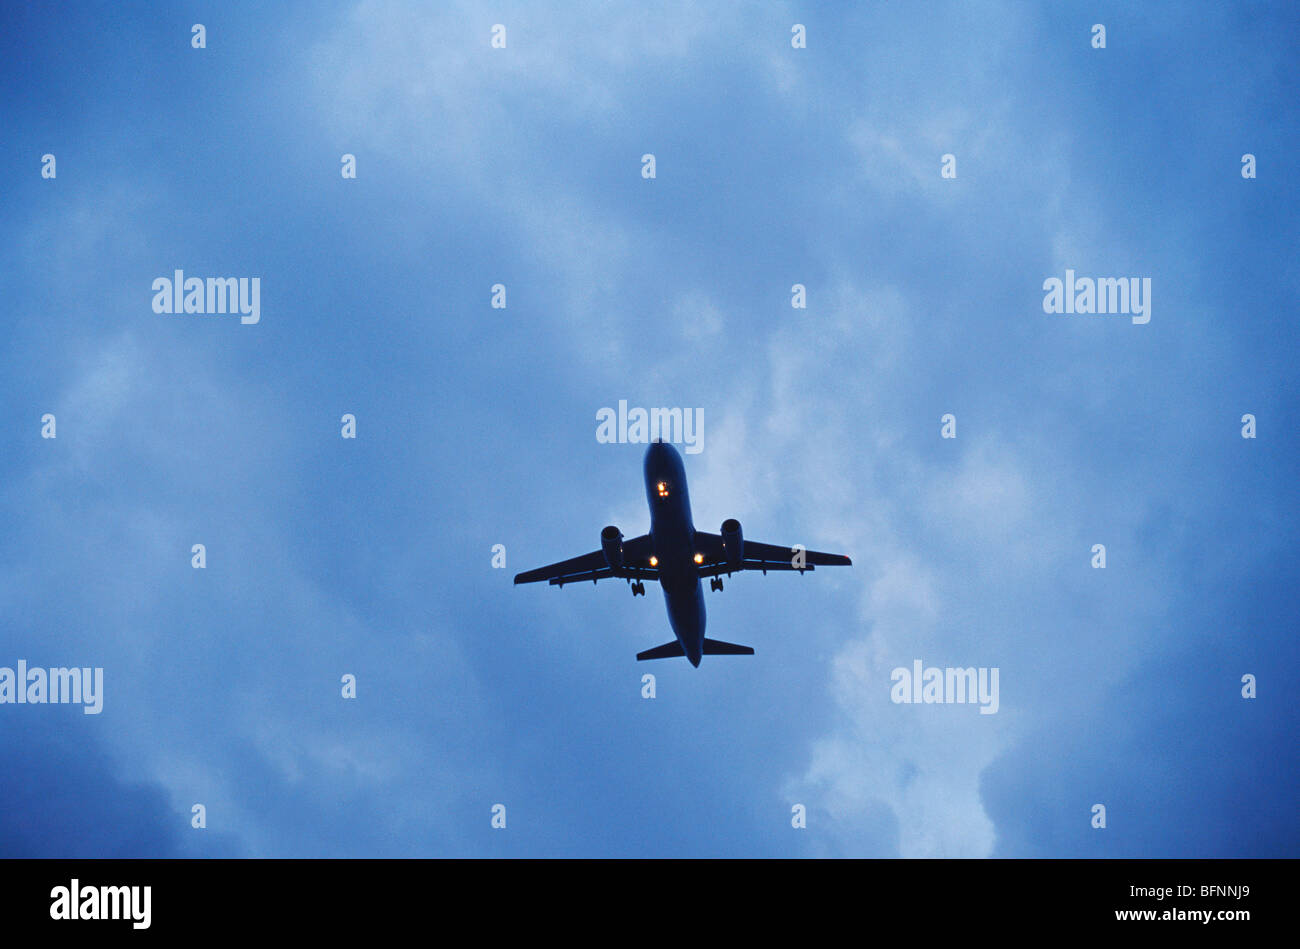 Aircraft at dusk, airplane, aeroplane, plane, landing, takeoff, Stock Photo